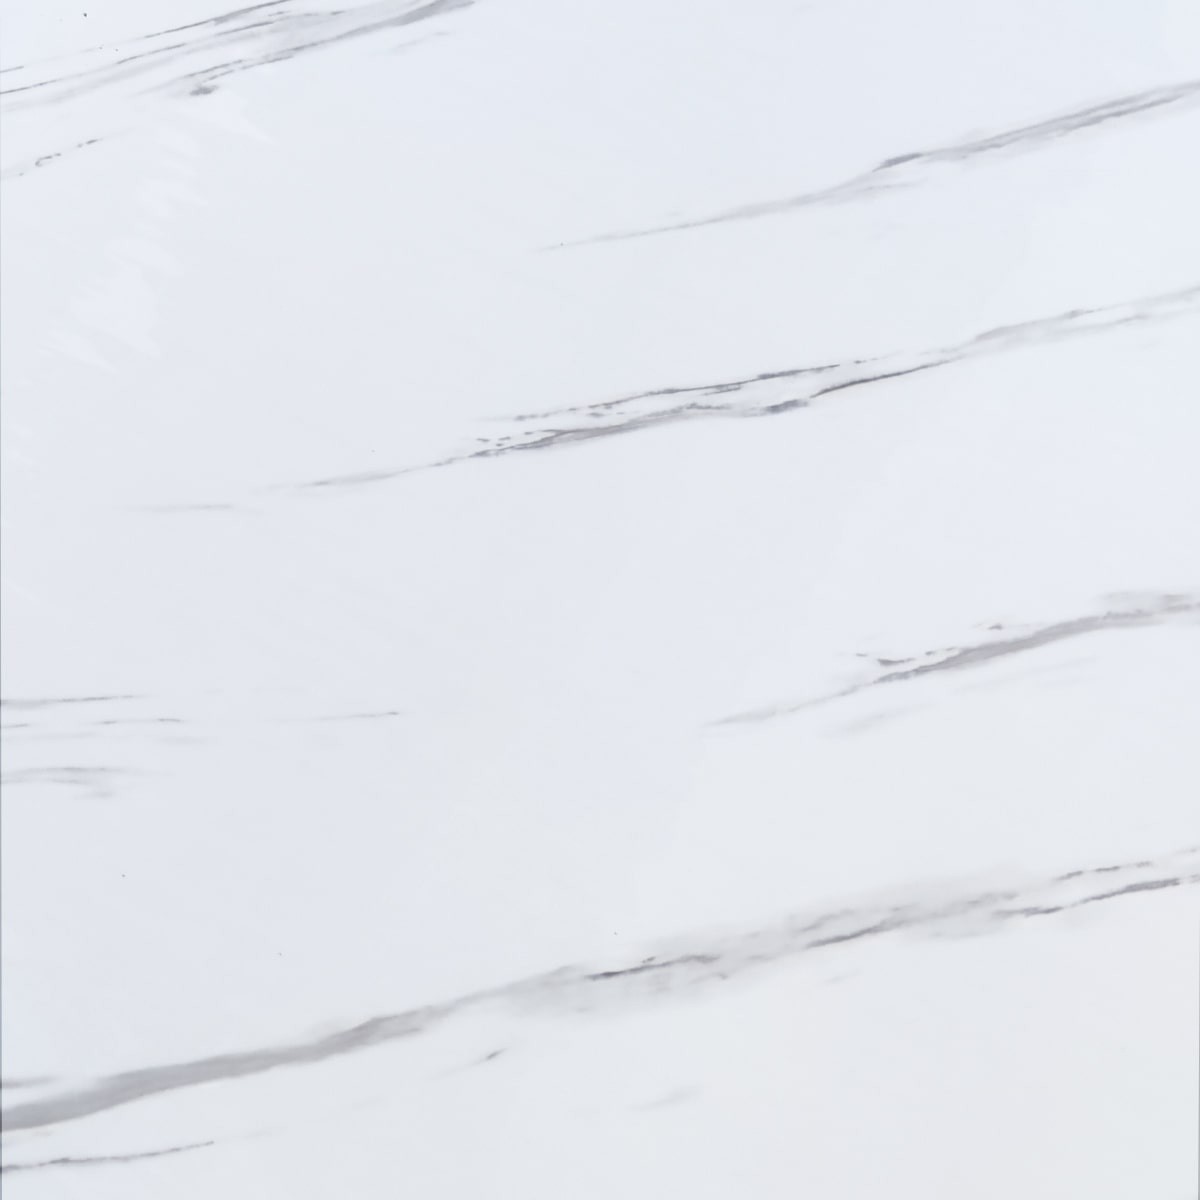 Виниловая плитка в рулоне «Белый мрамор» (81014-1) 3000x600x2мм. - фото 2